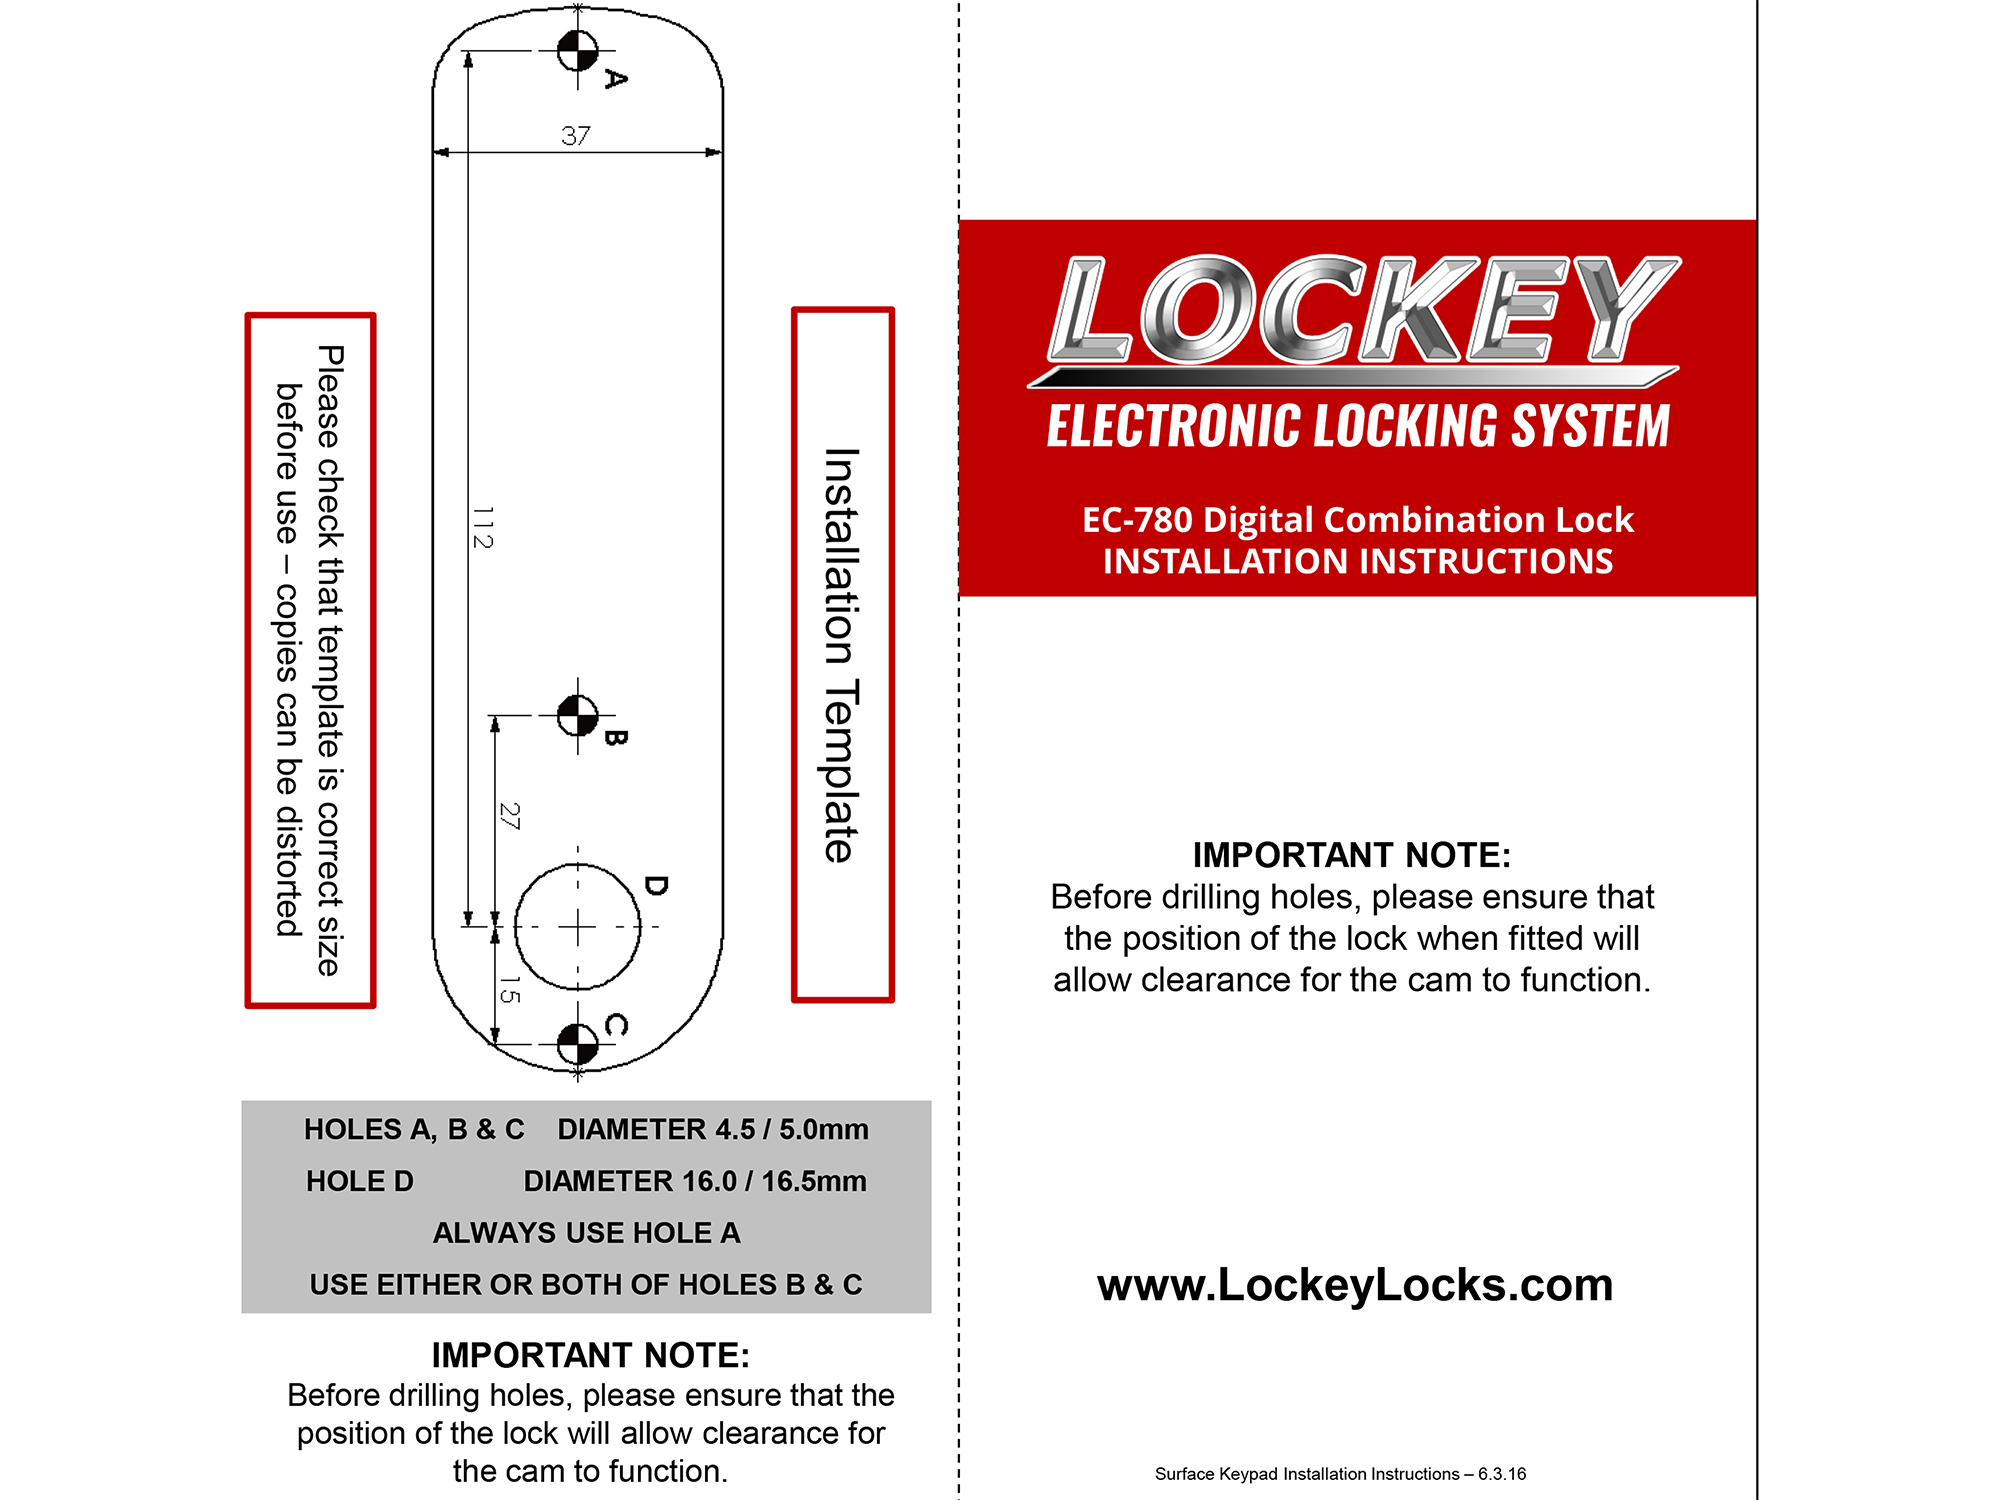 Lockey EC782 ADA Lever-Handle Cabinet/Locker Cam Lock